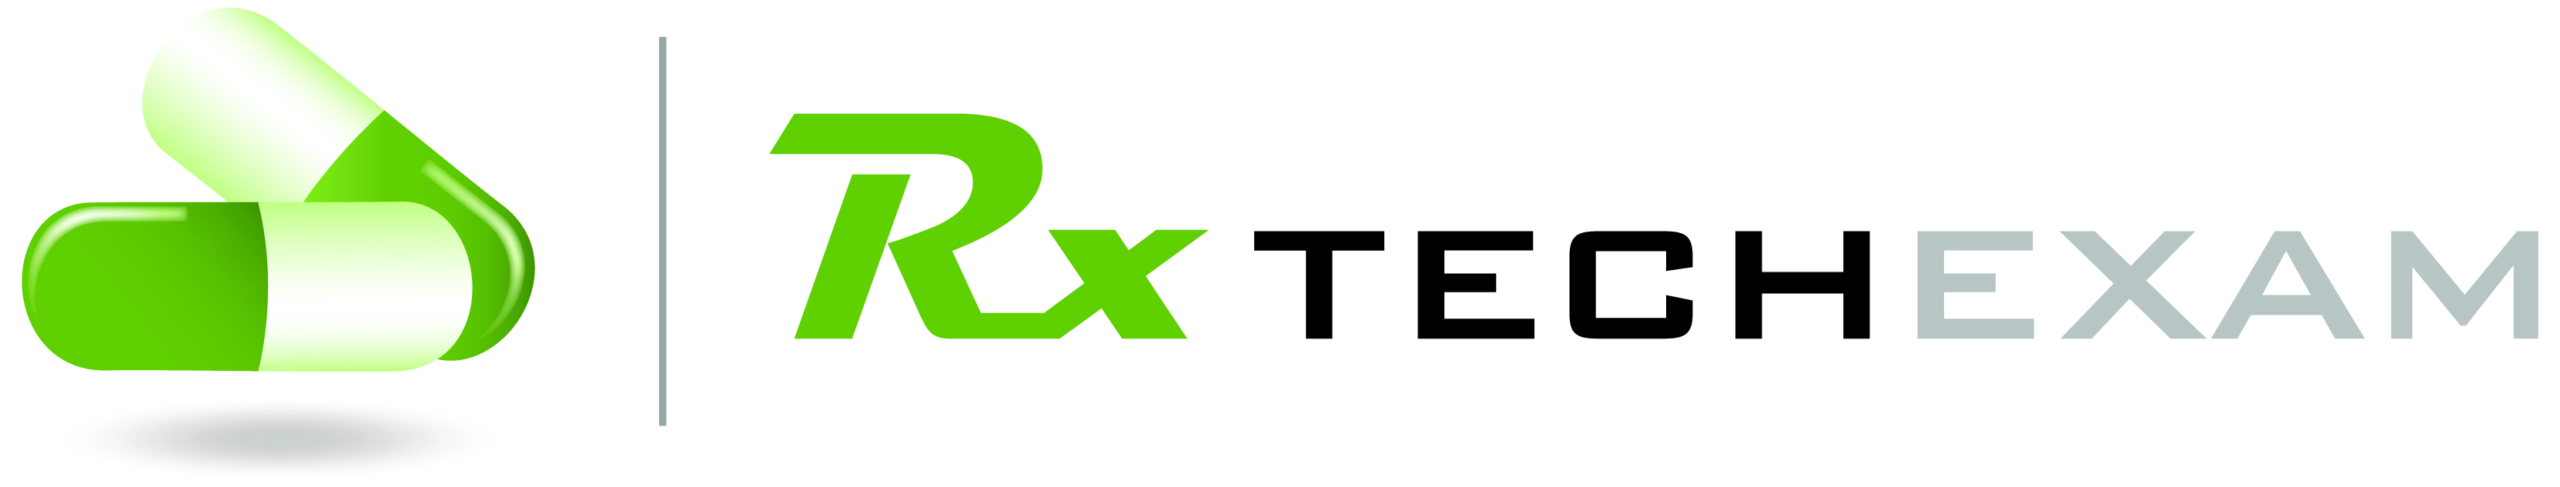 Rx Tech Exam logo